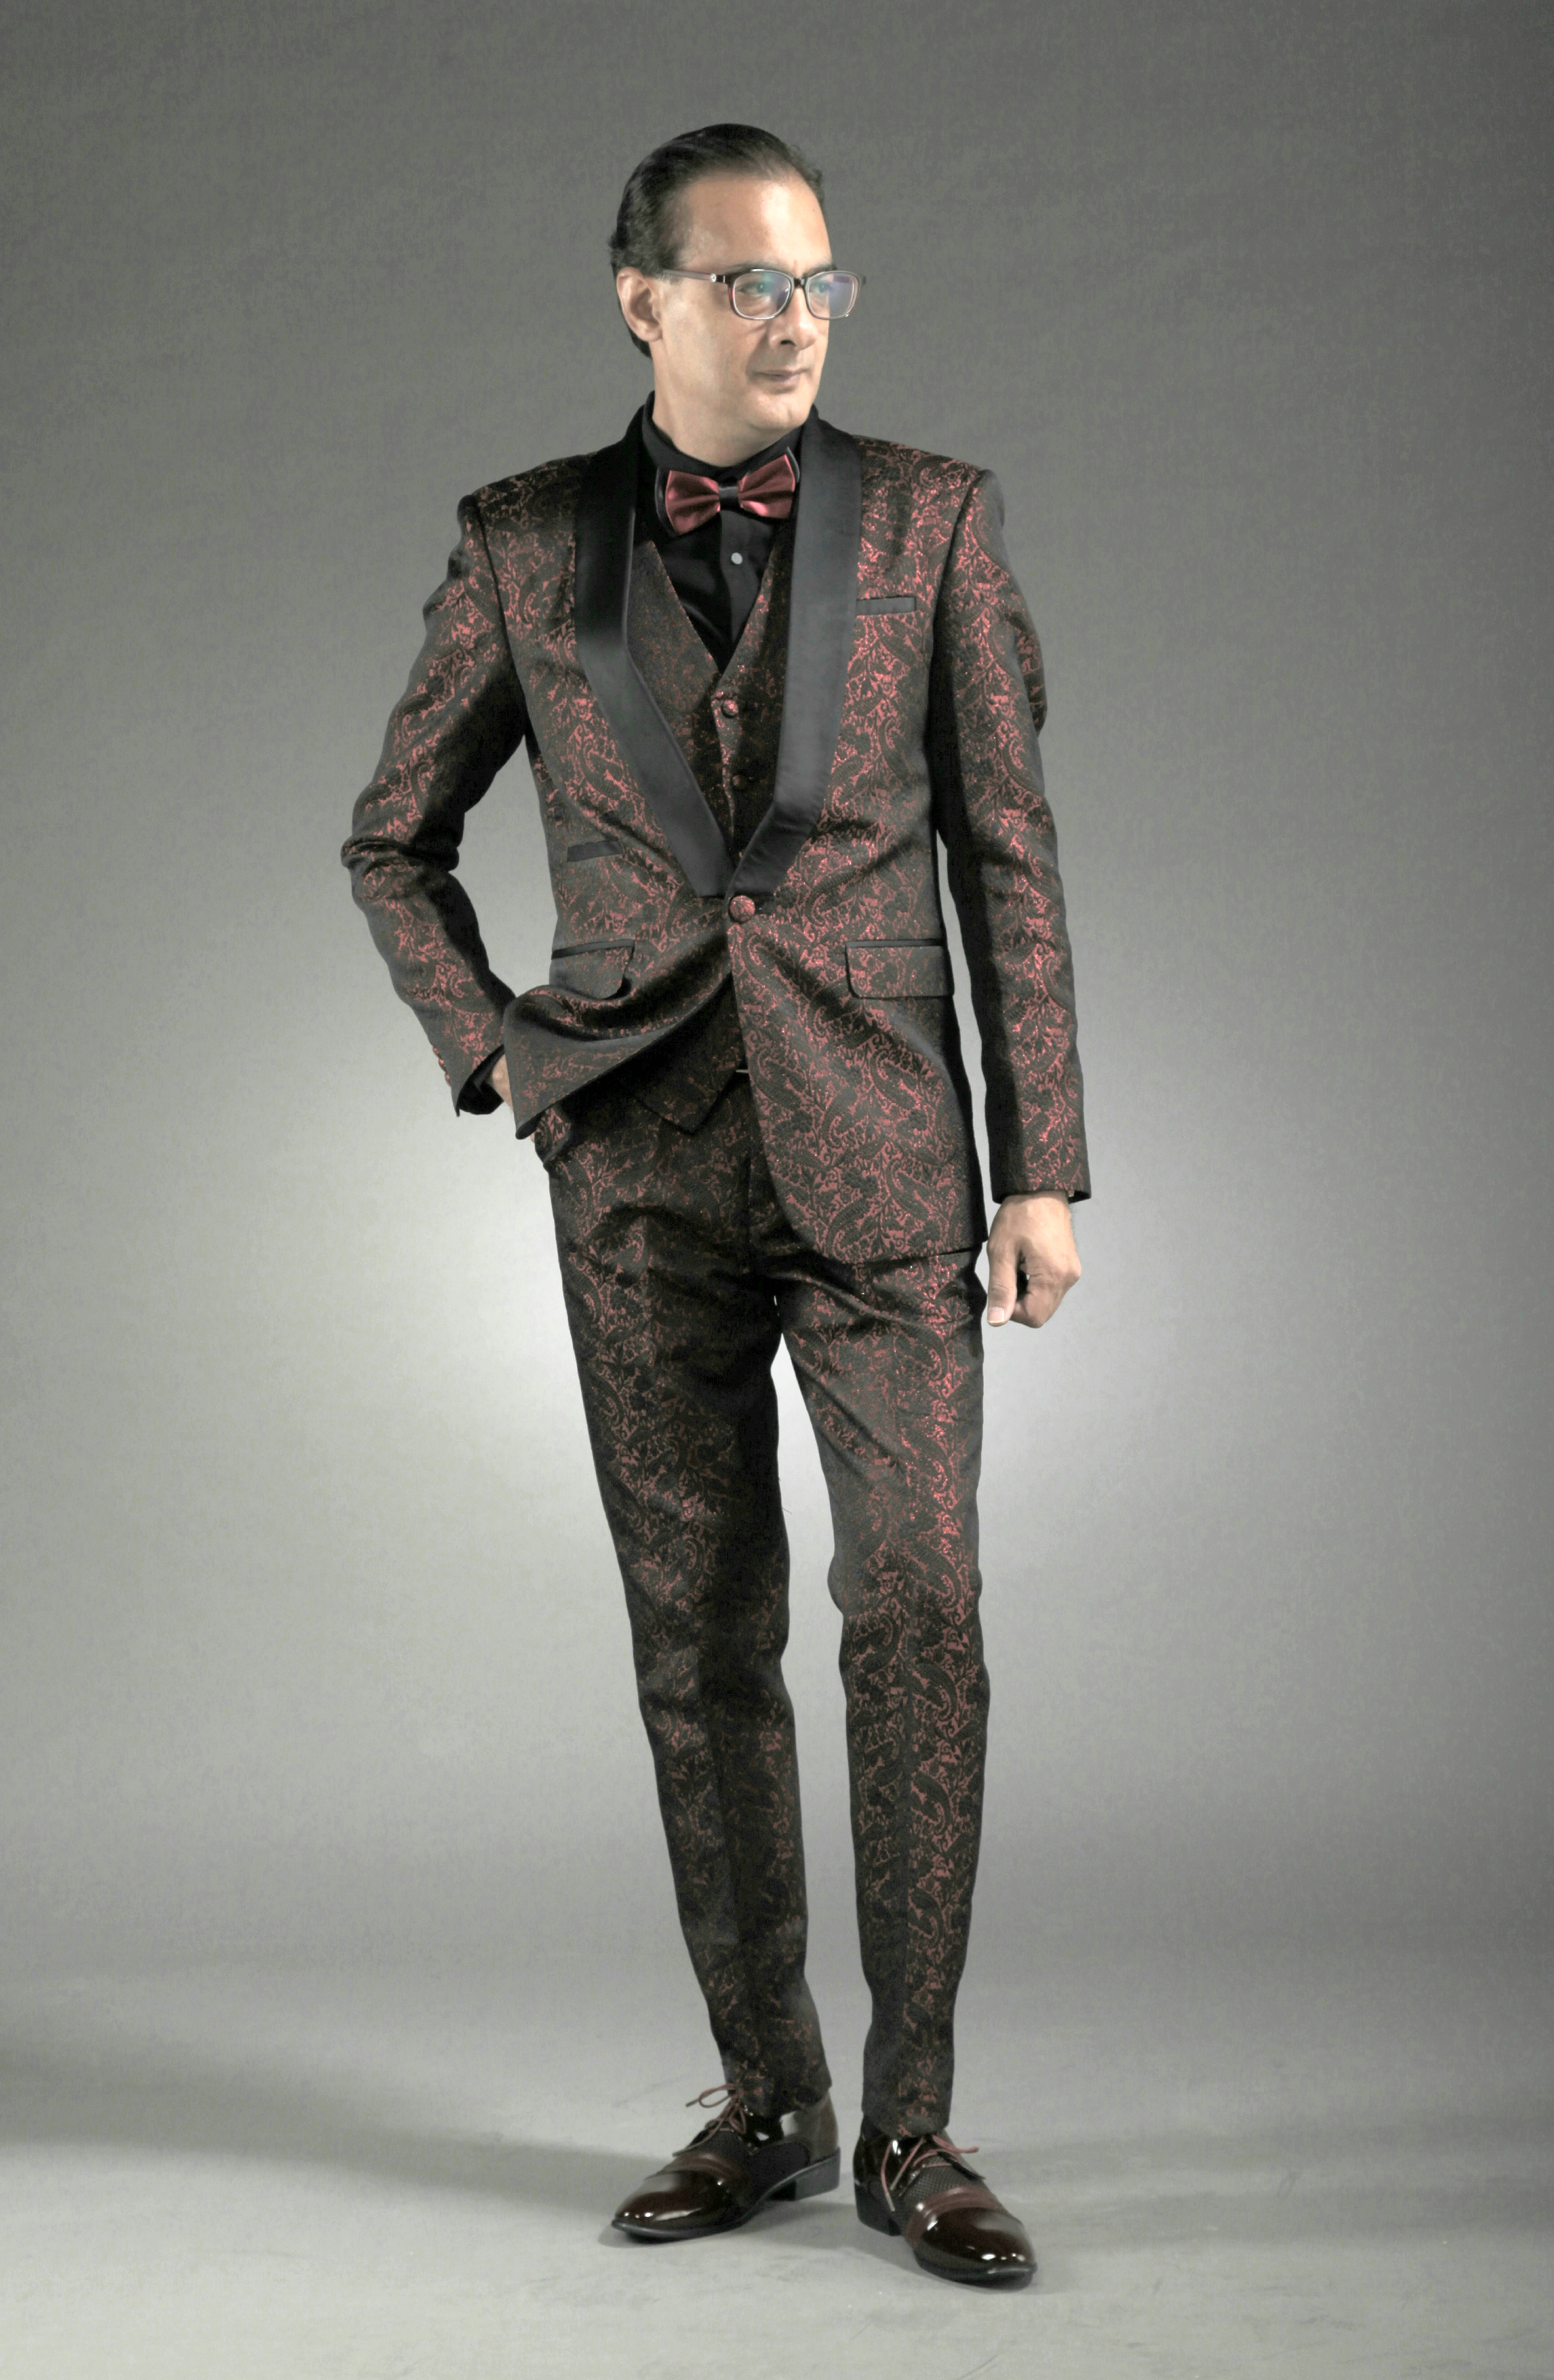 Suit Rental Suits Rent Hire Designer My Singapore Tailor Tailors Rentals Shop Tuxedo Black Tie Wedding Formal 01